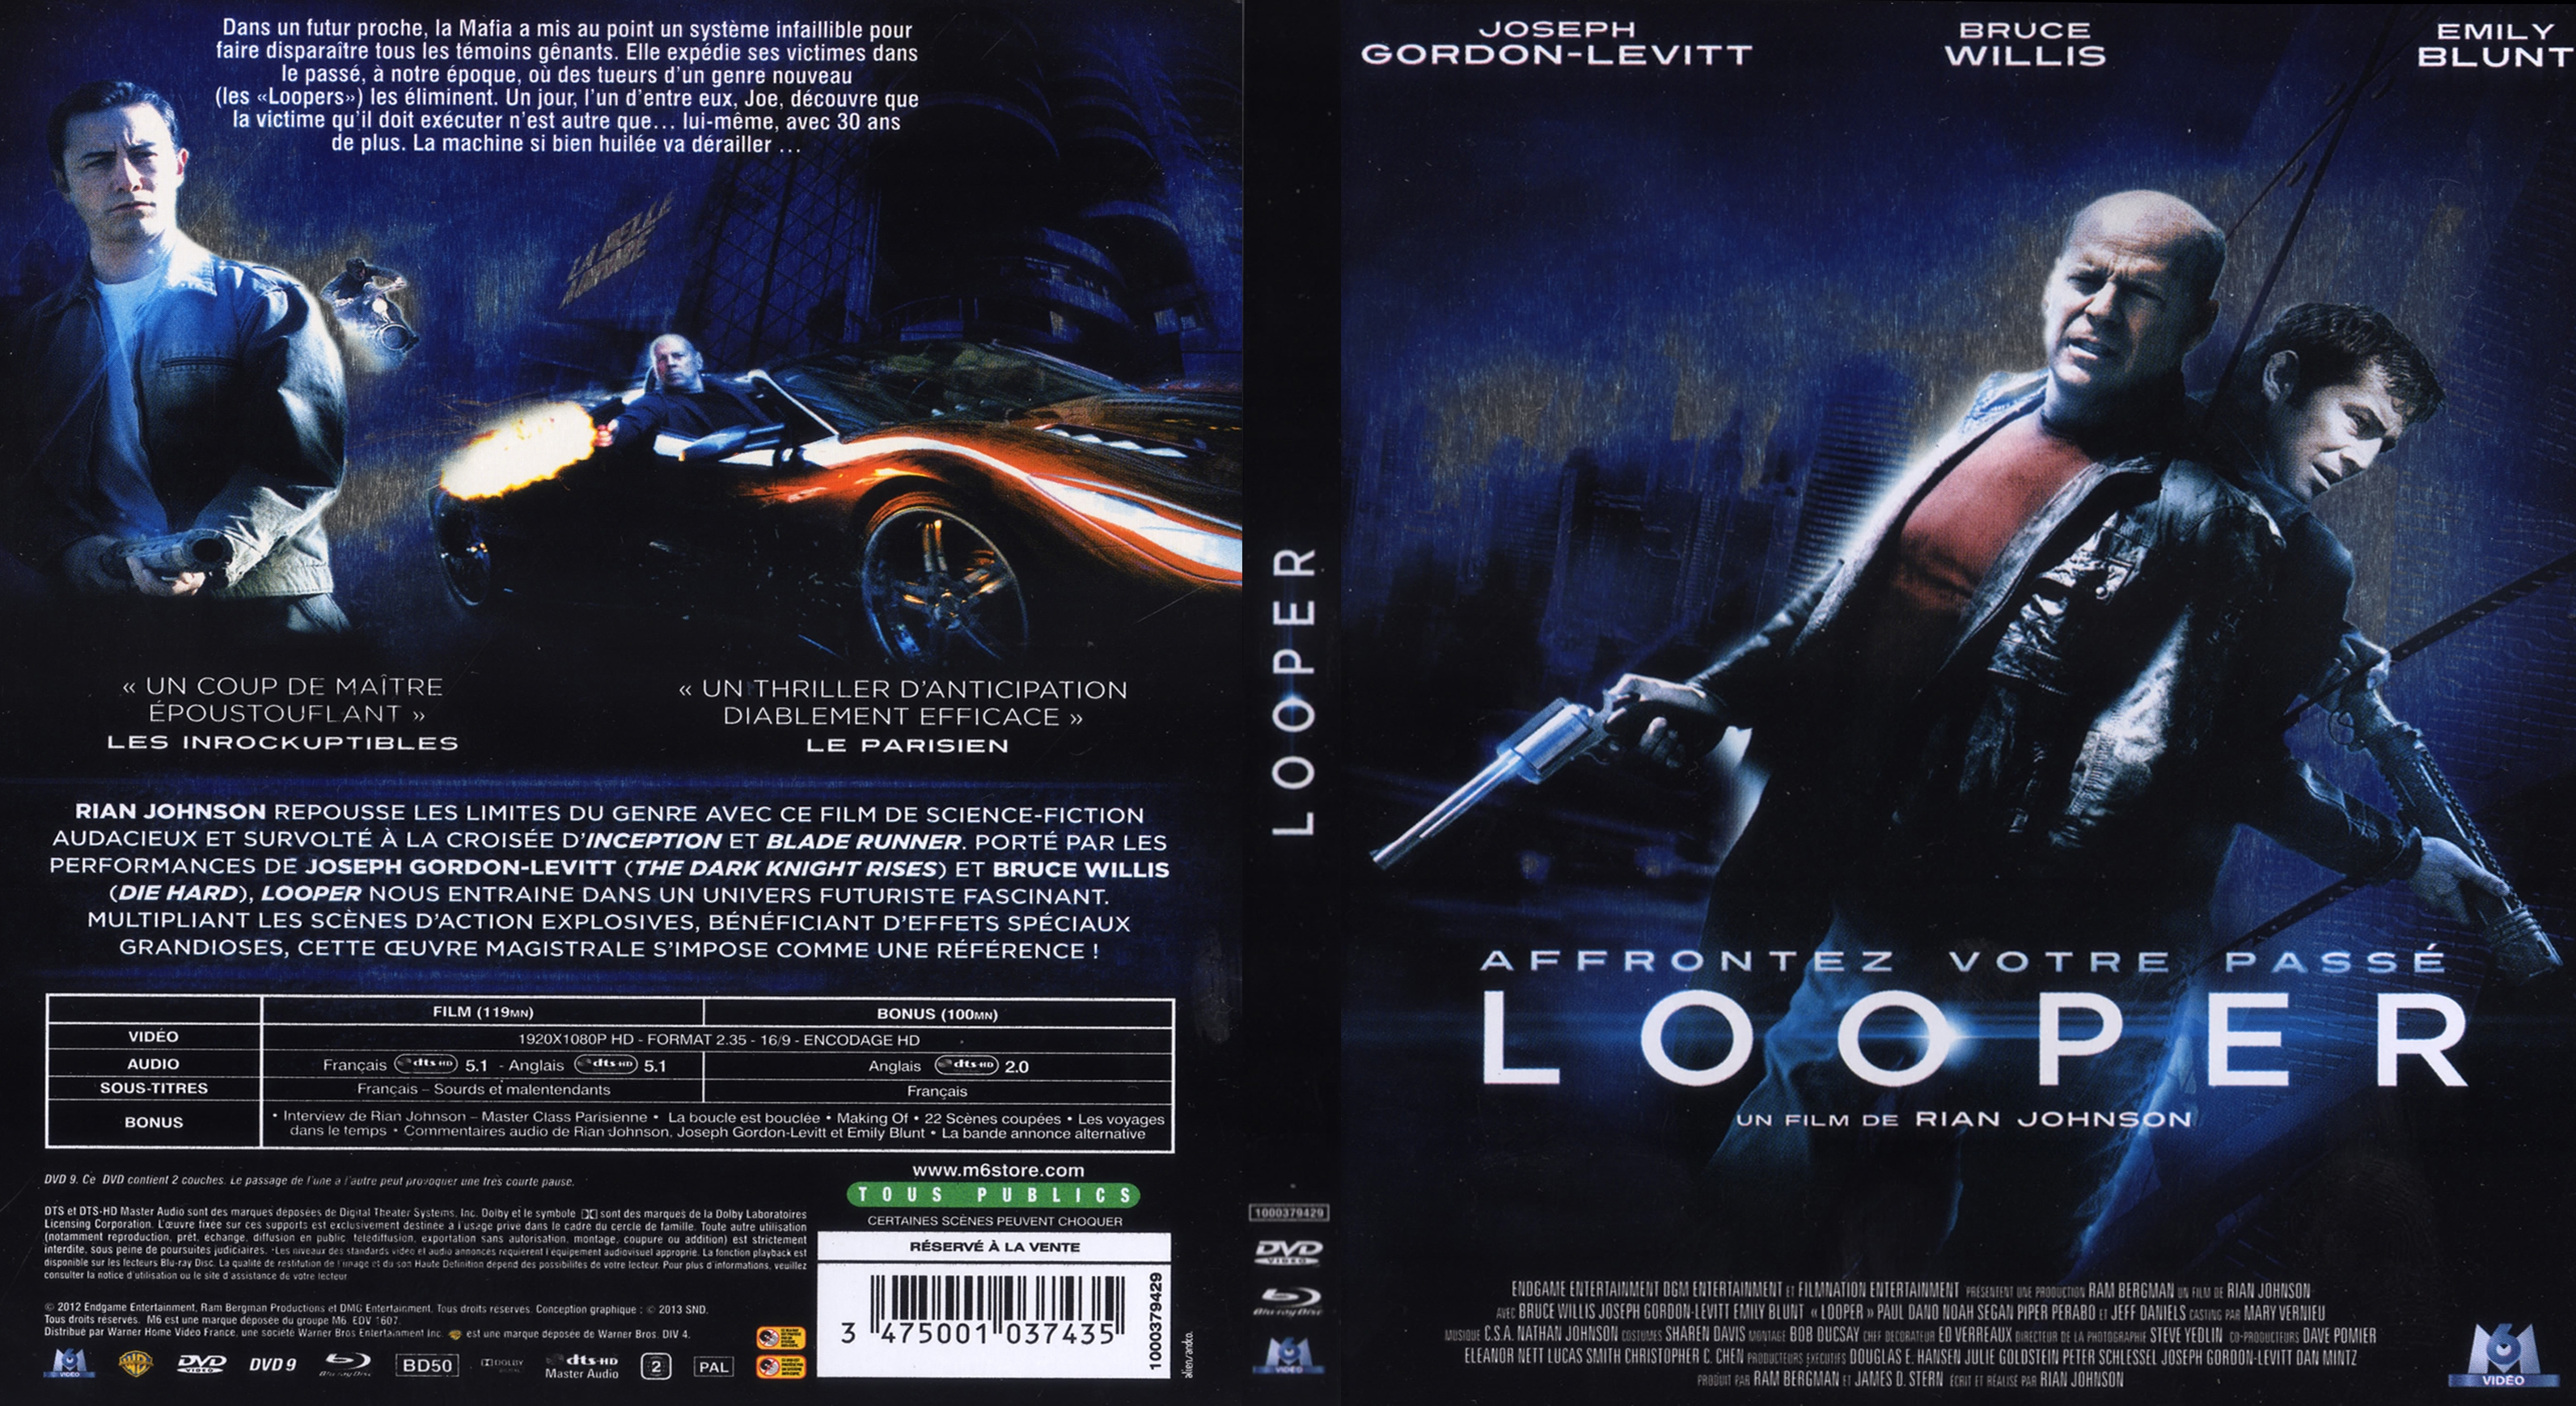 Jaquette DVD Looper (BLU-RAY) v2